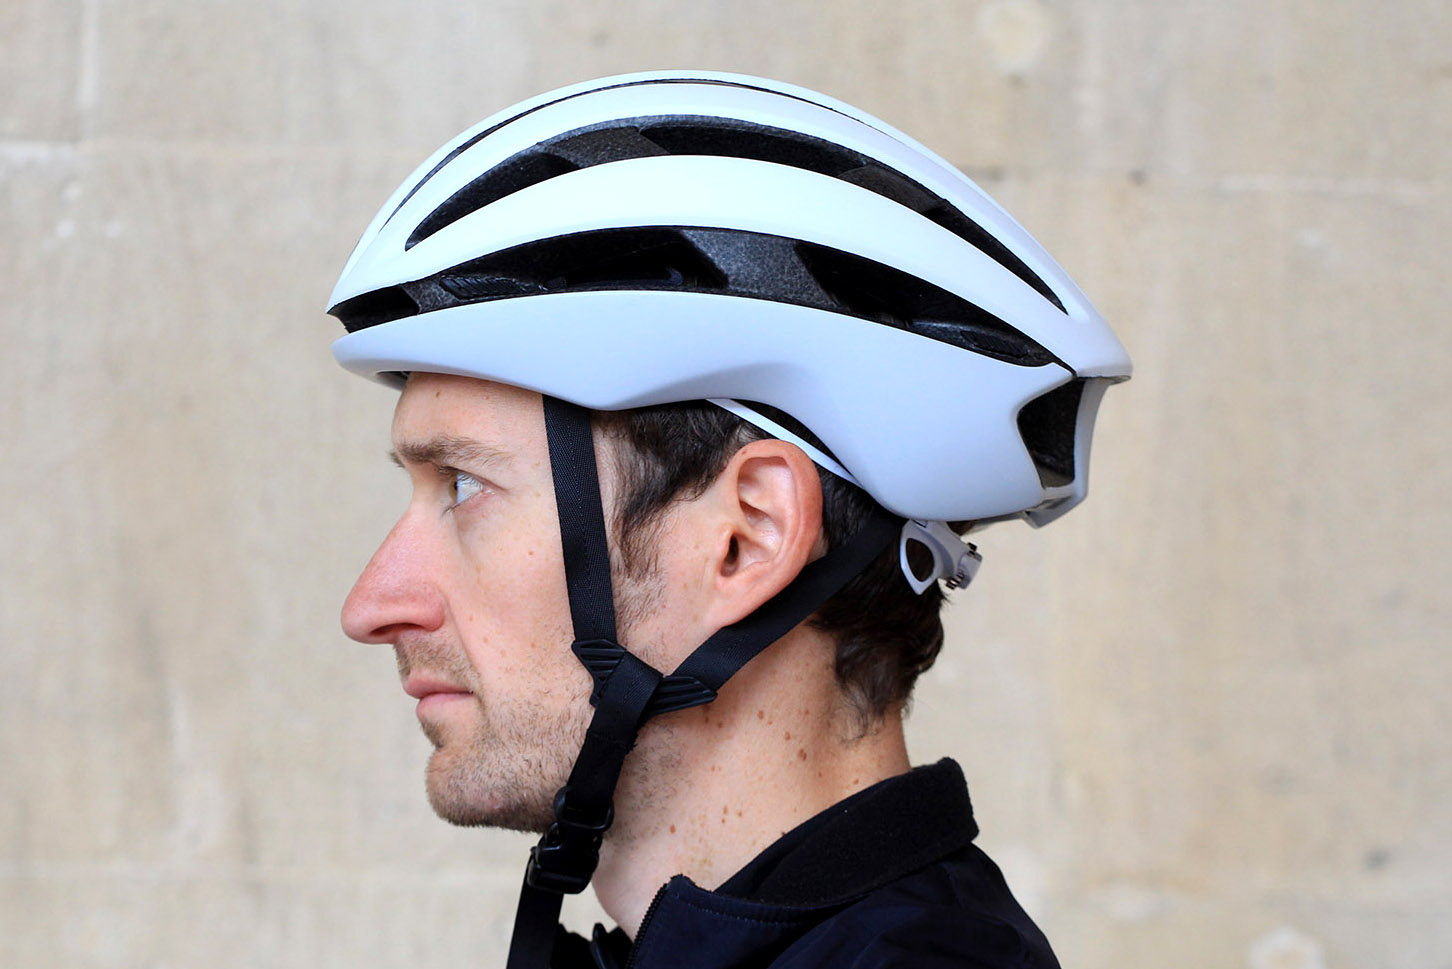 specialized airnet helmet